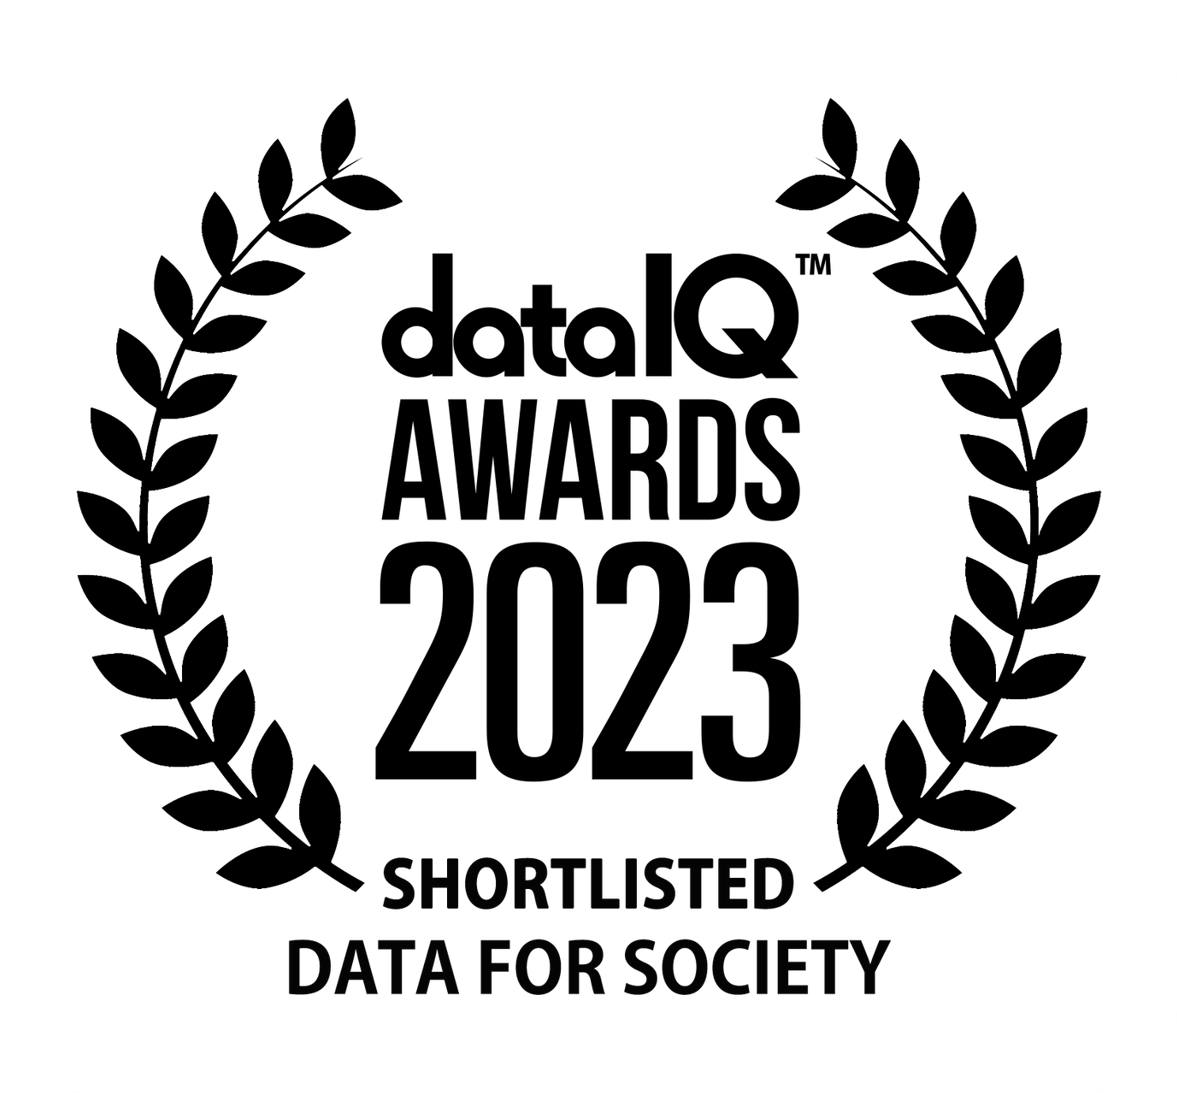 DataIQ Awards logo